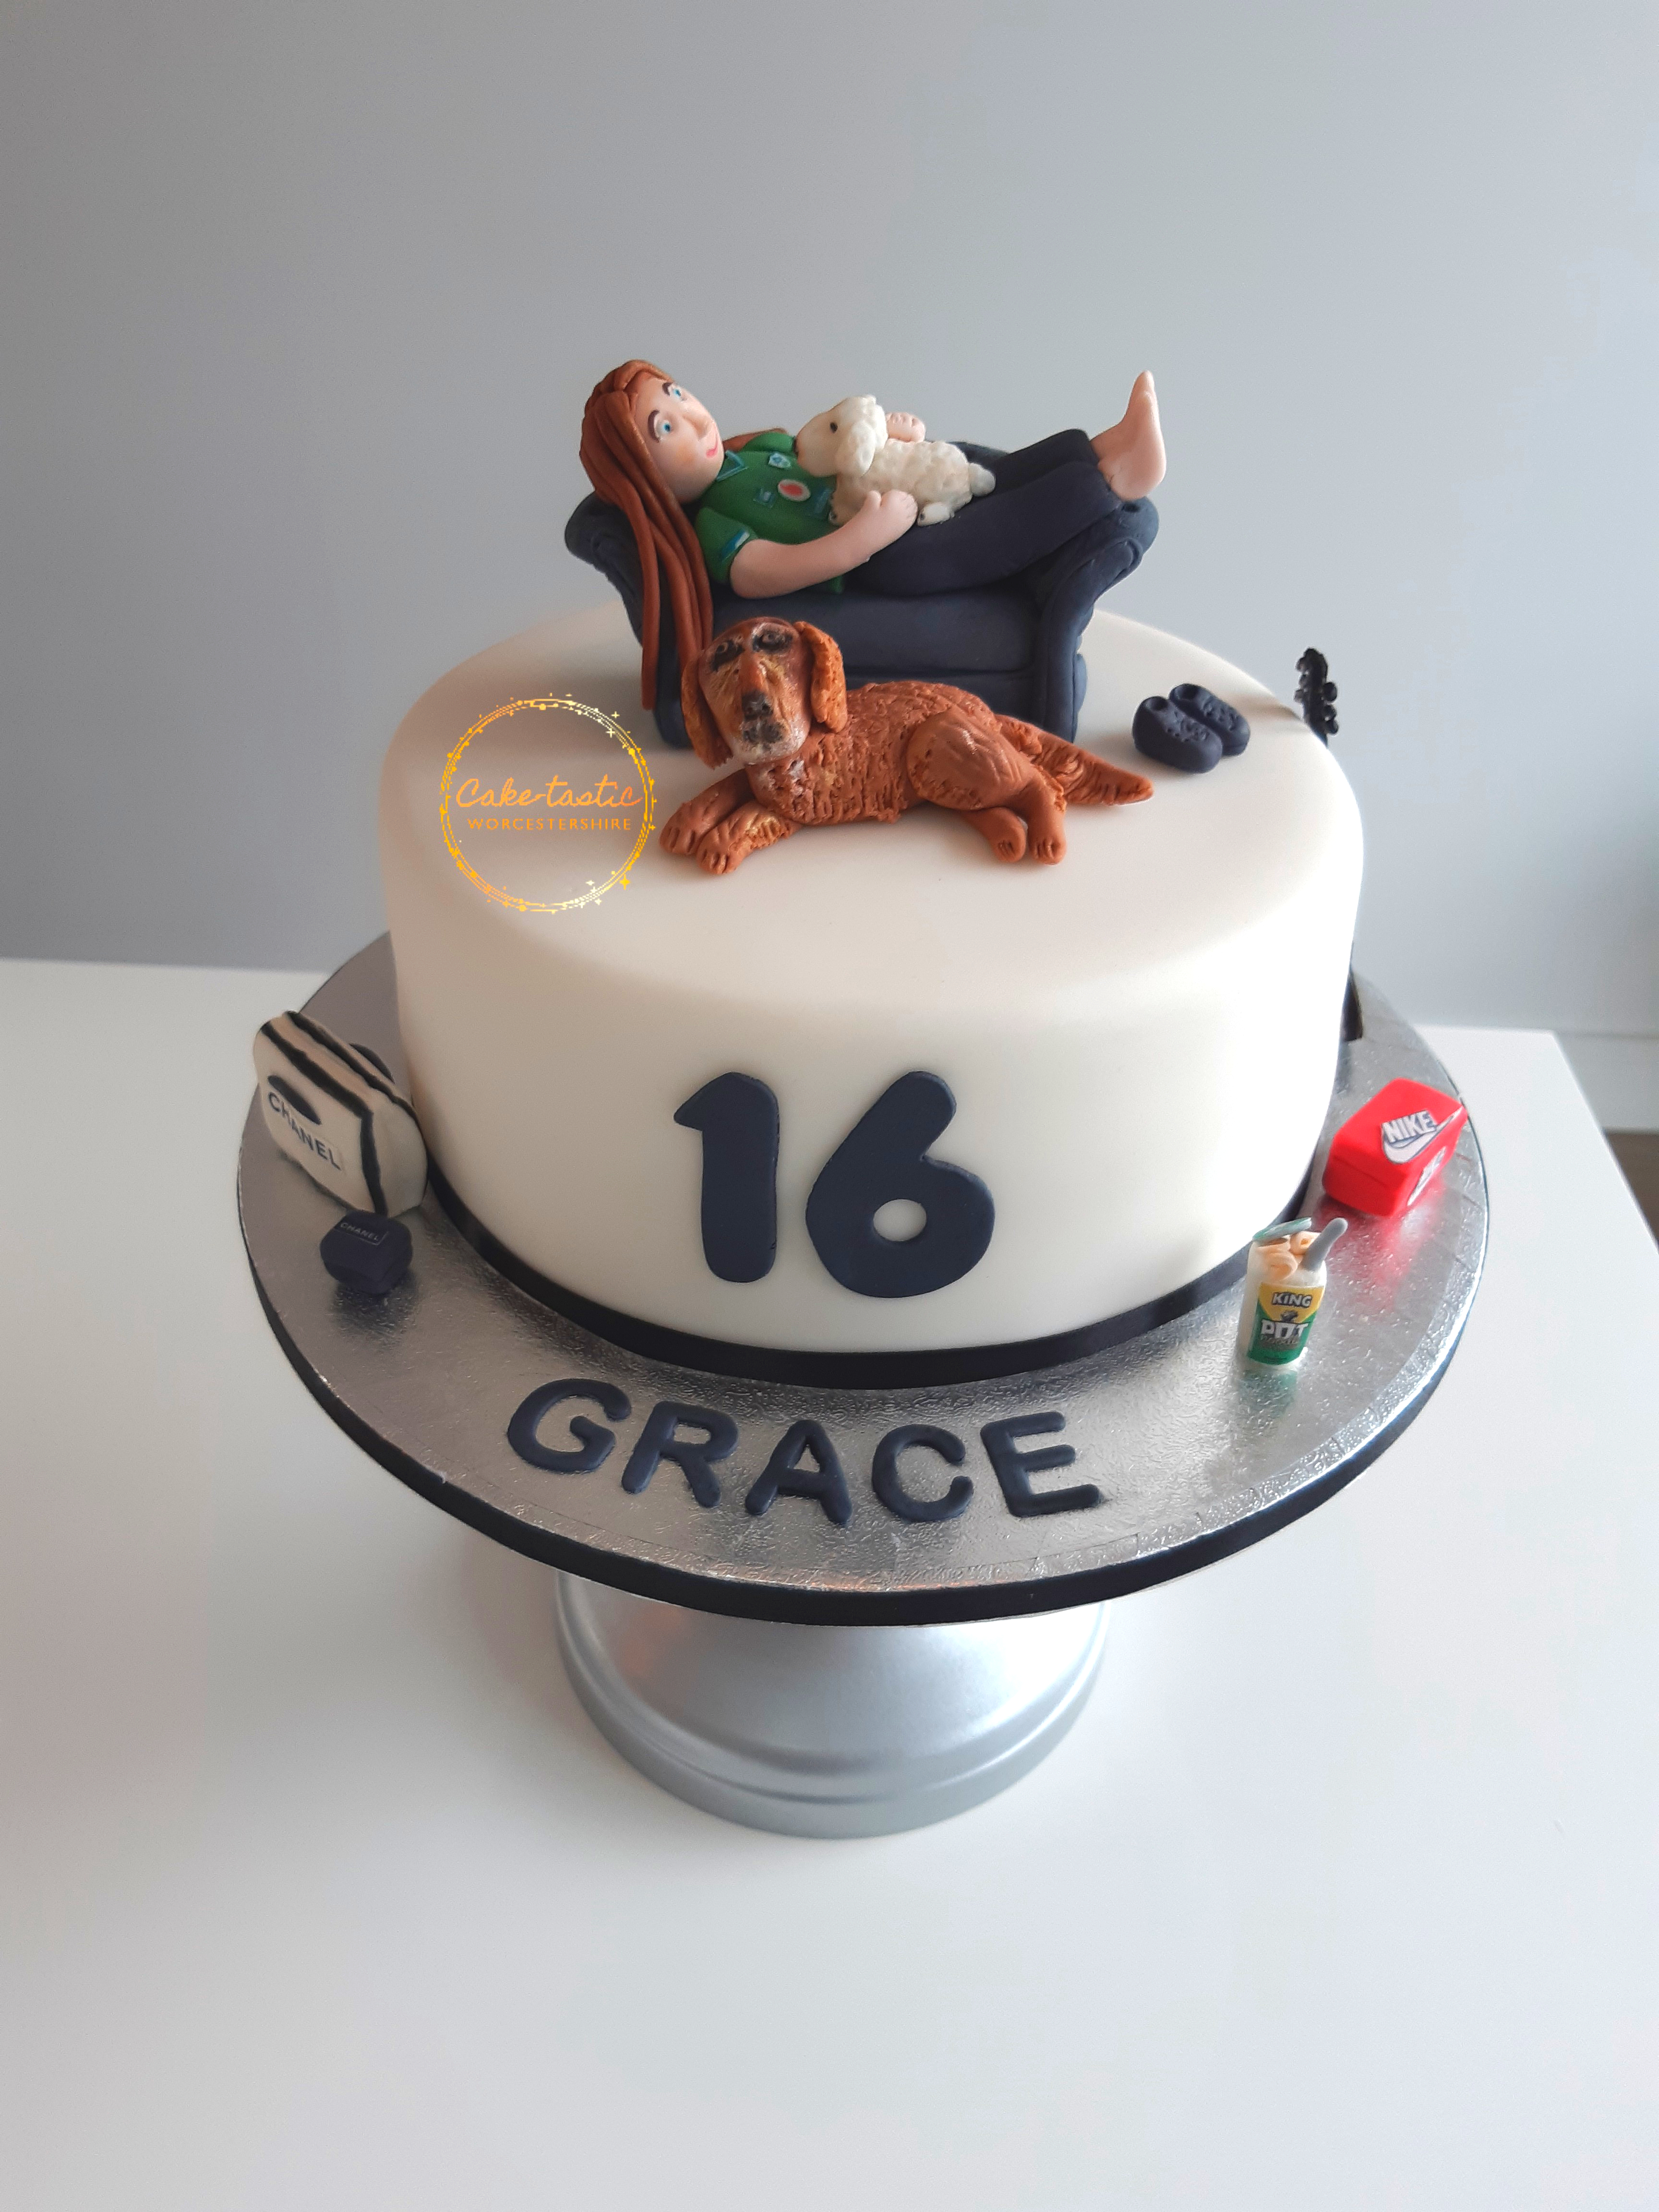 Grace Cake